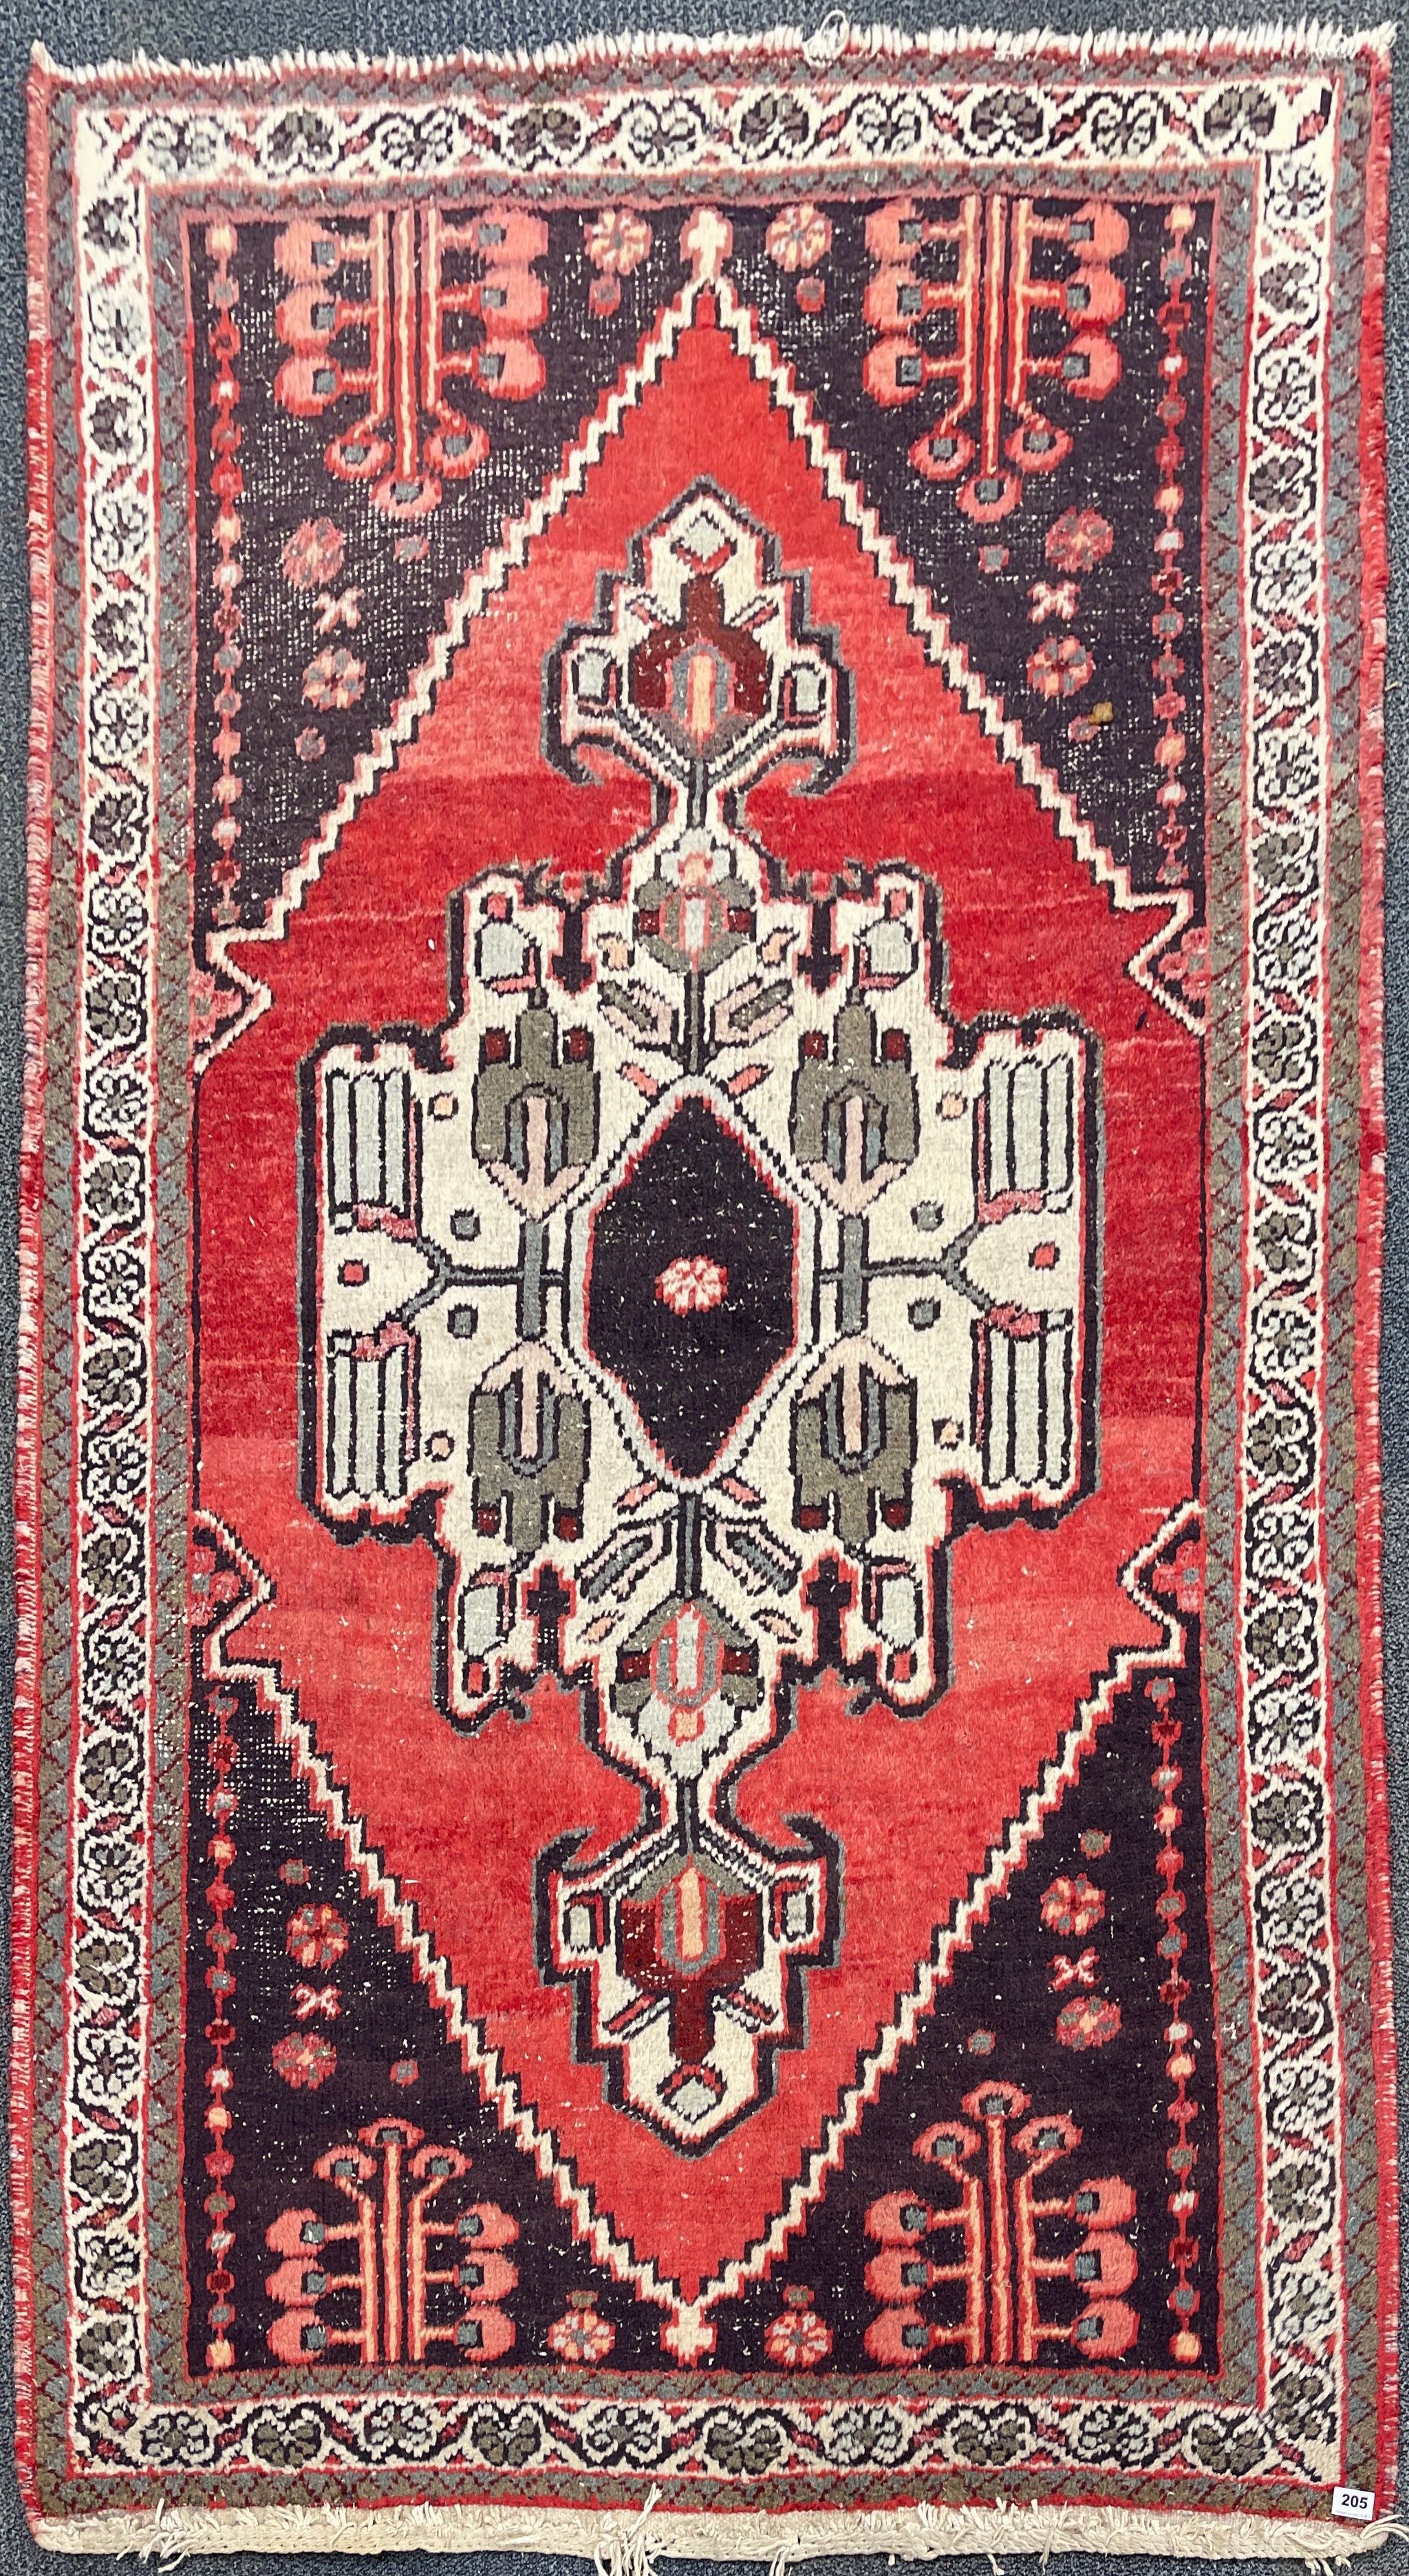 An antique Eastern hand woven wool rug, 193 x 135cm.